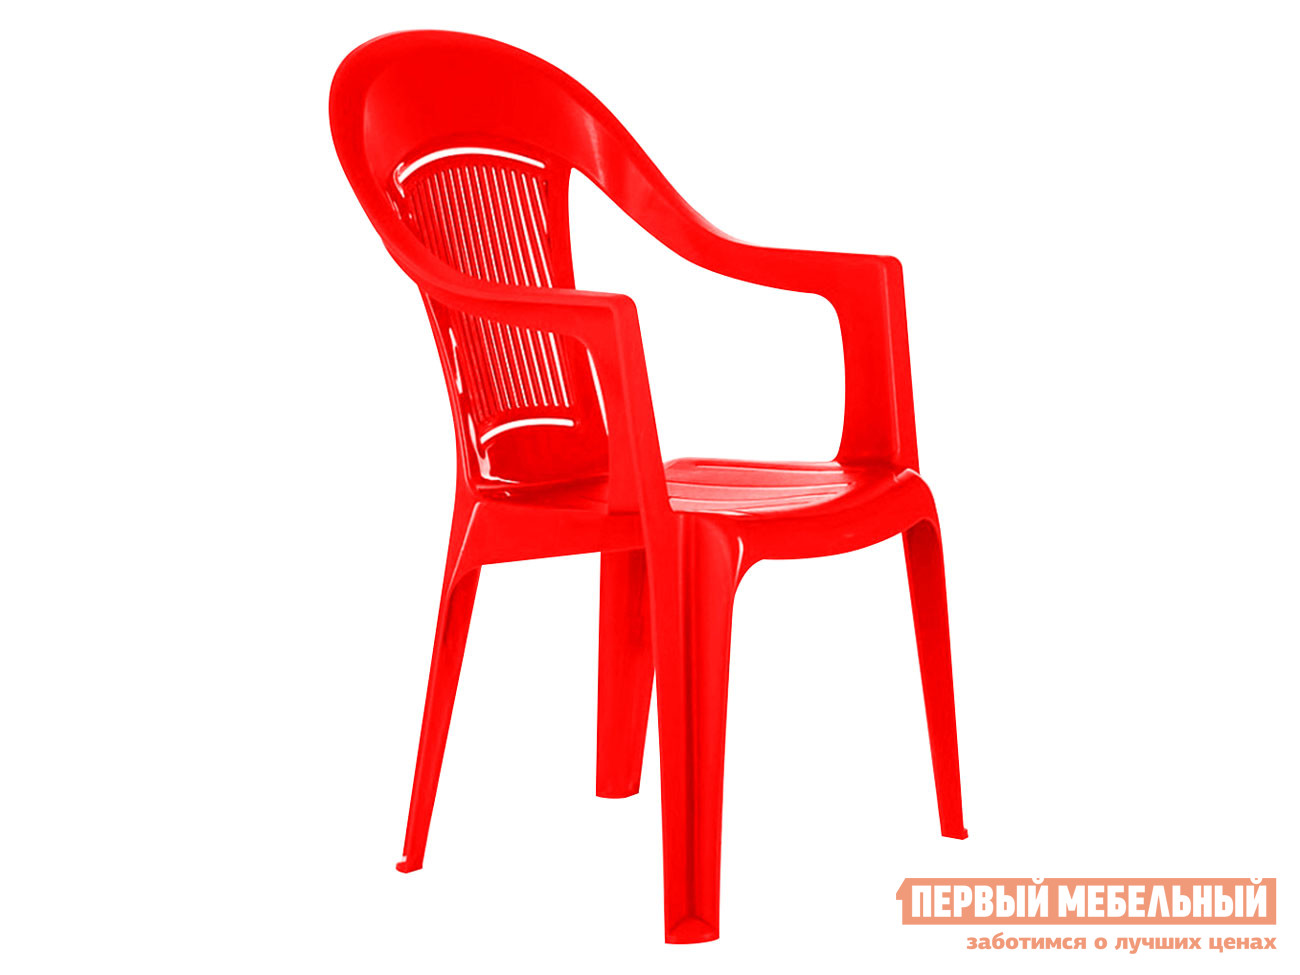 Пластиковый стул  Фламинго Красный, пластик